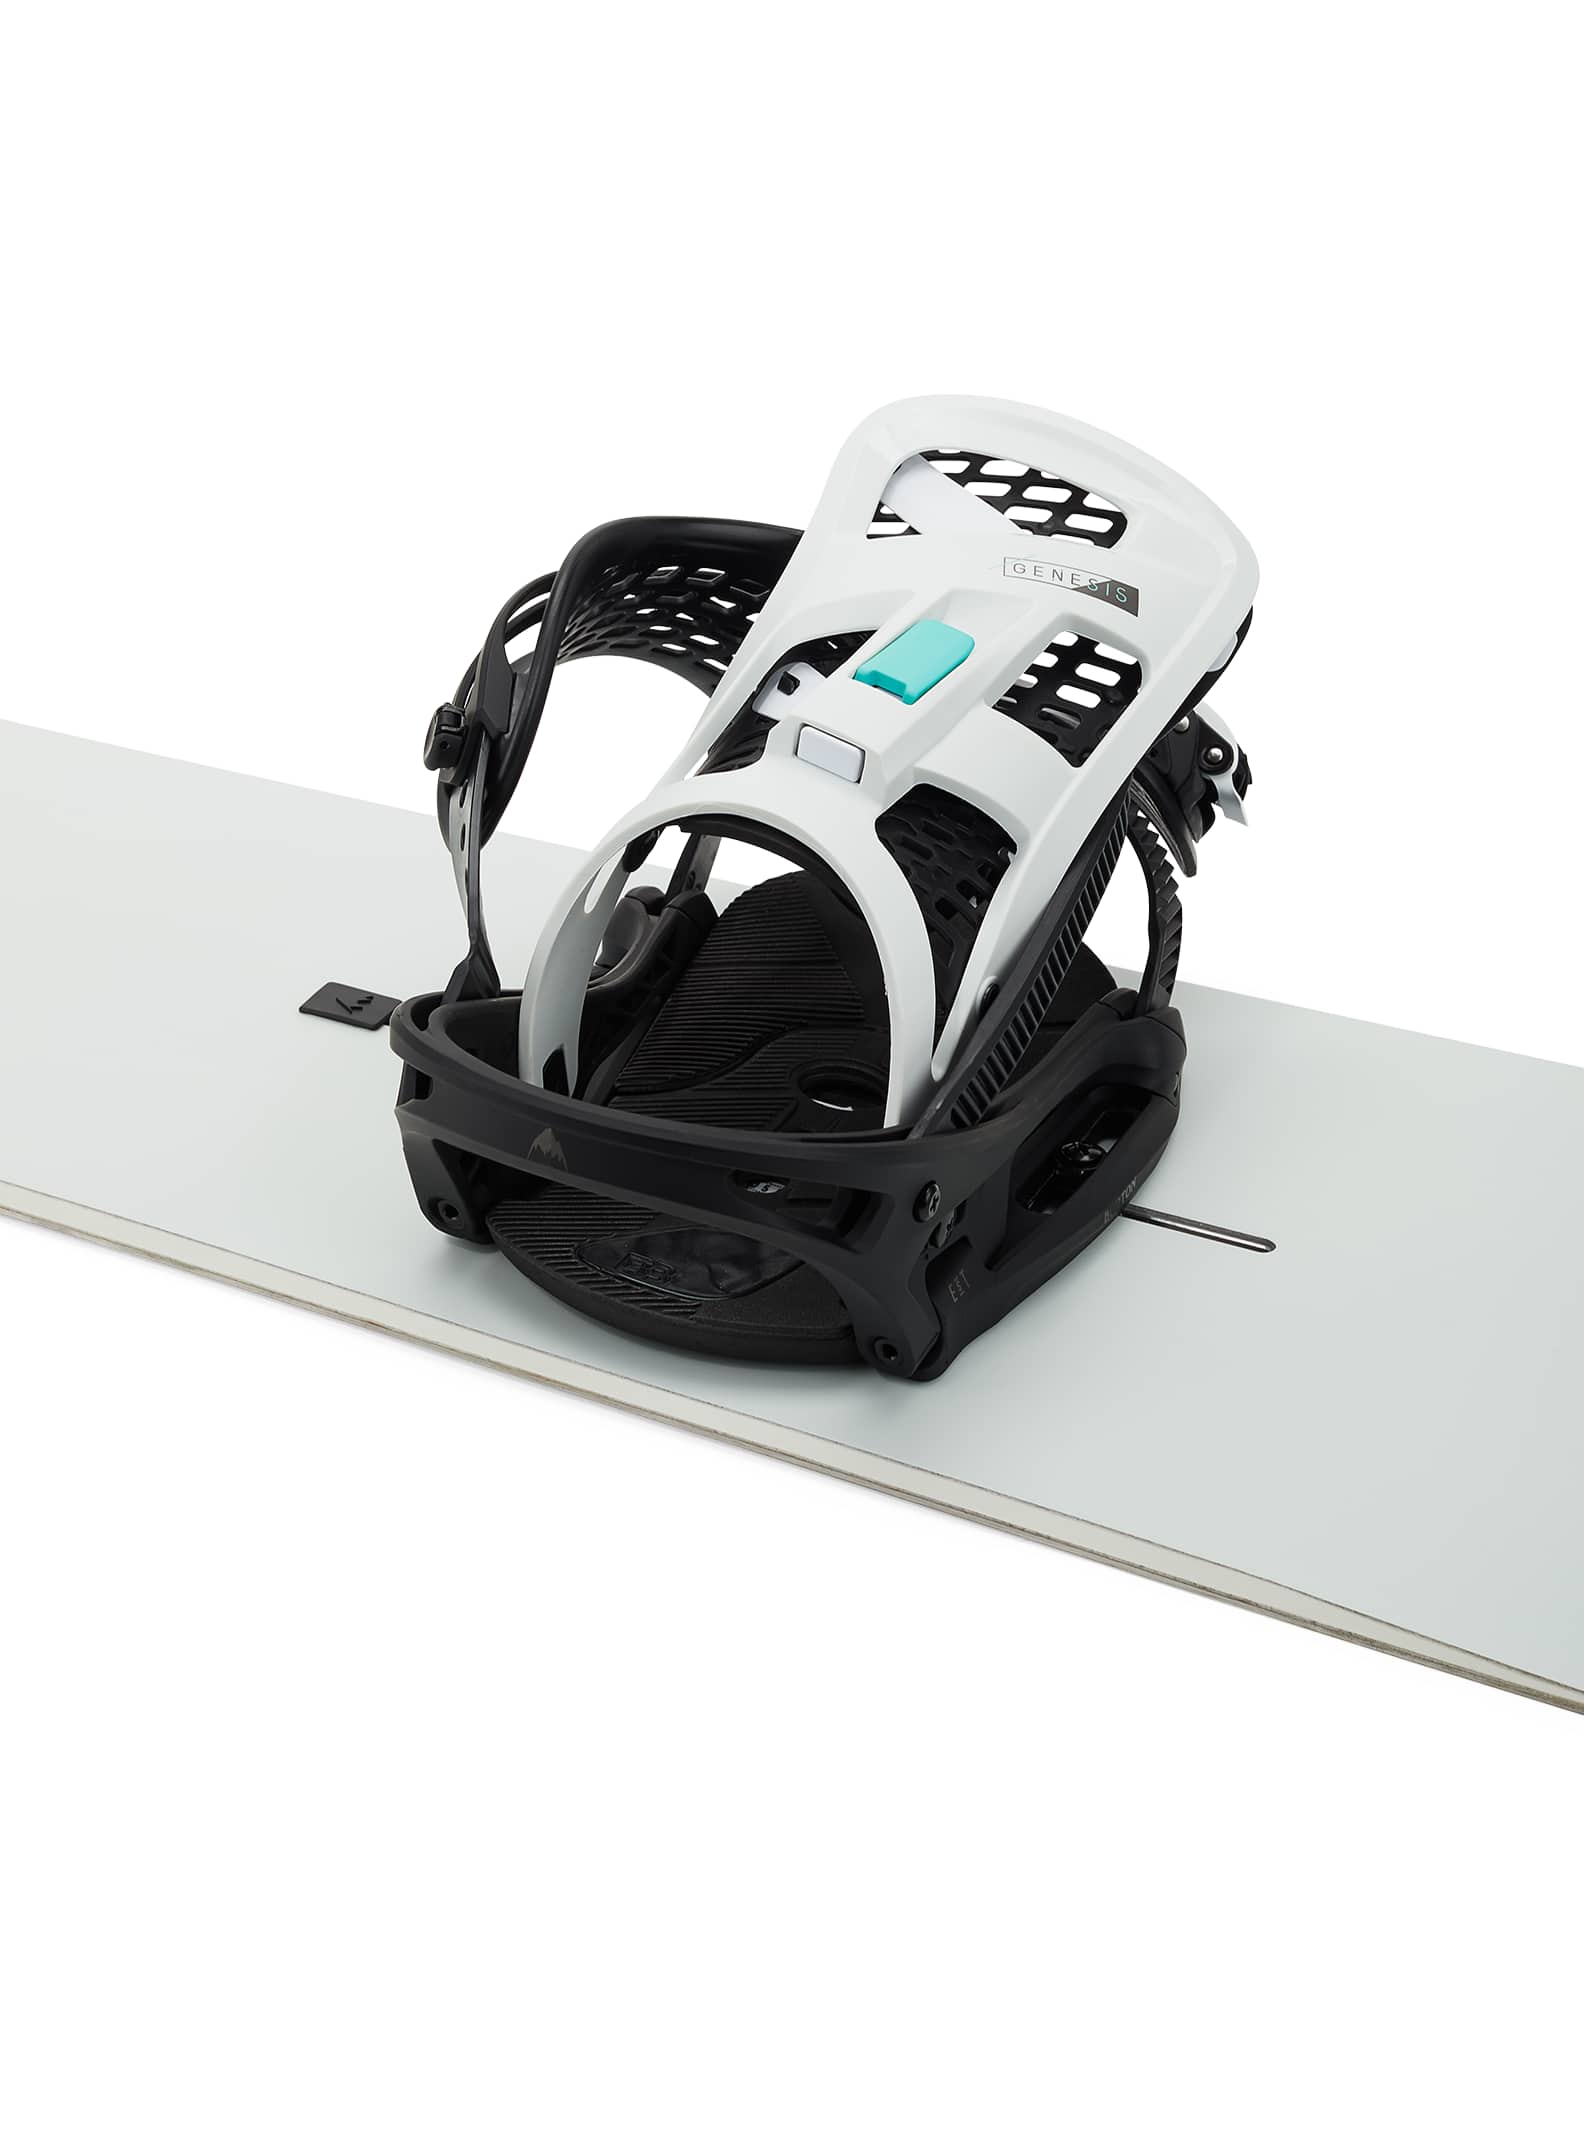 Burton Step On X Review Binding Review - Snowboard Robot